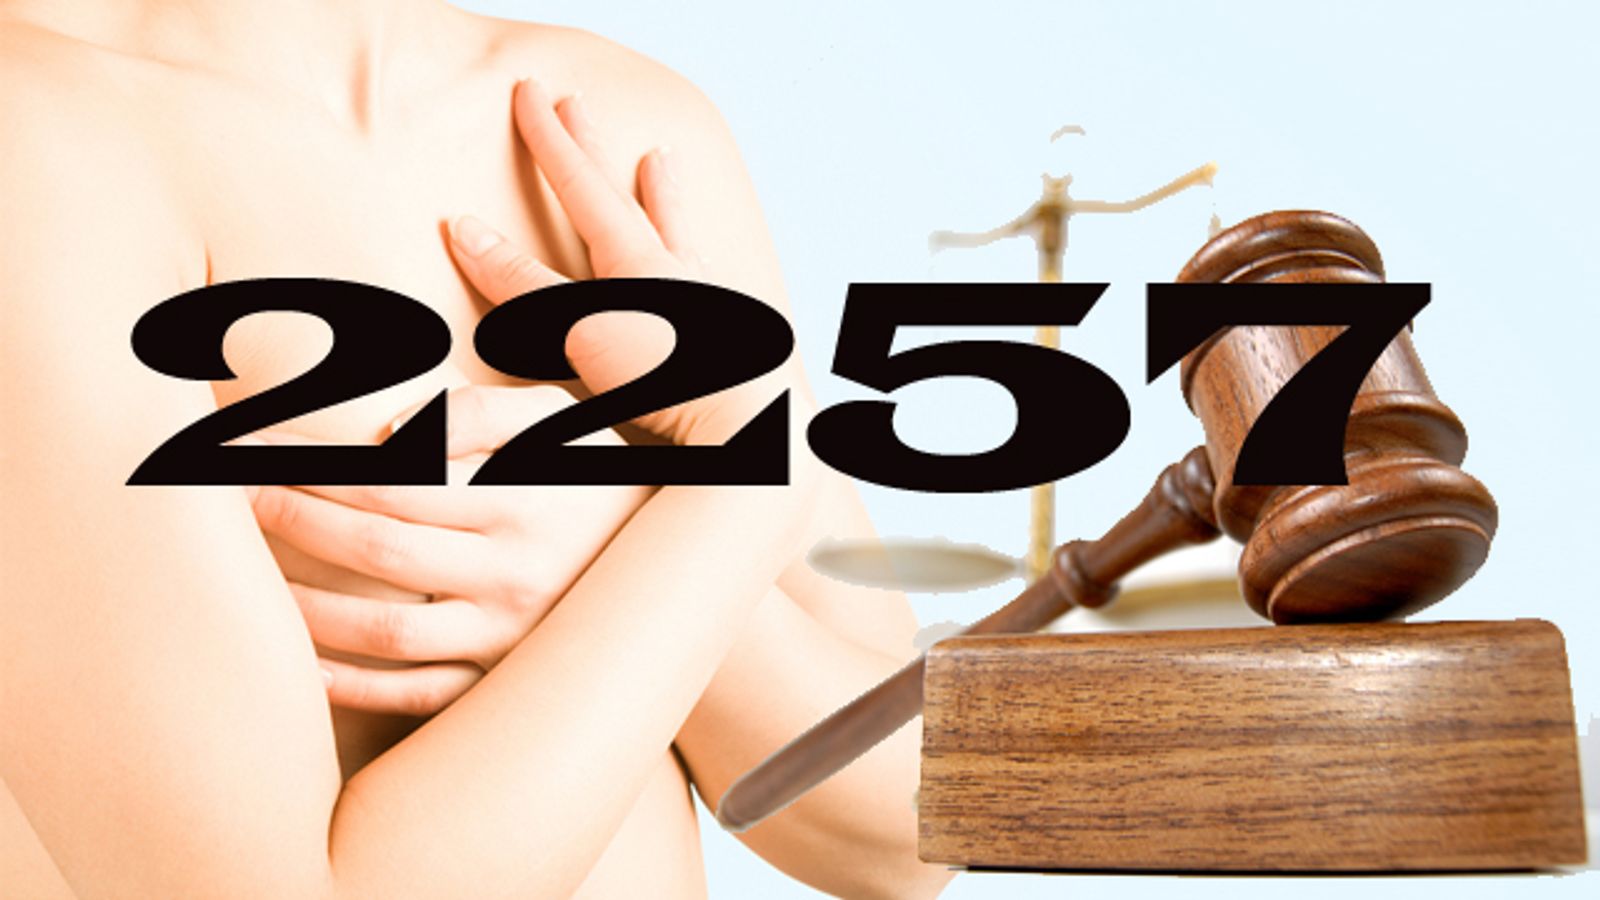 Date Set For Appeal Argument in 2257 Case